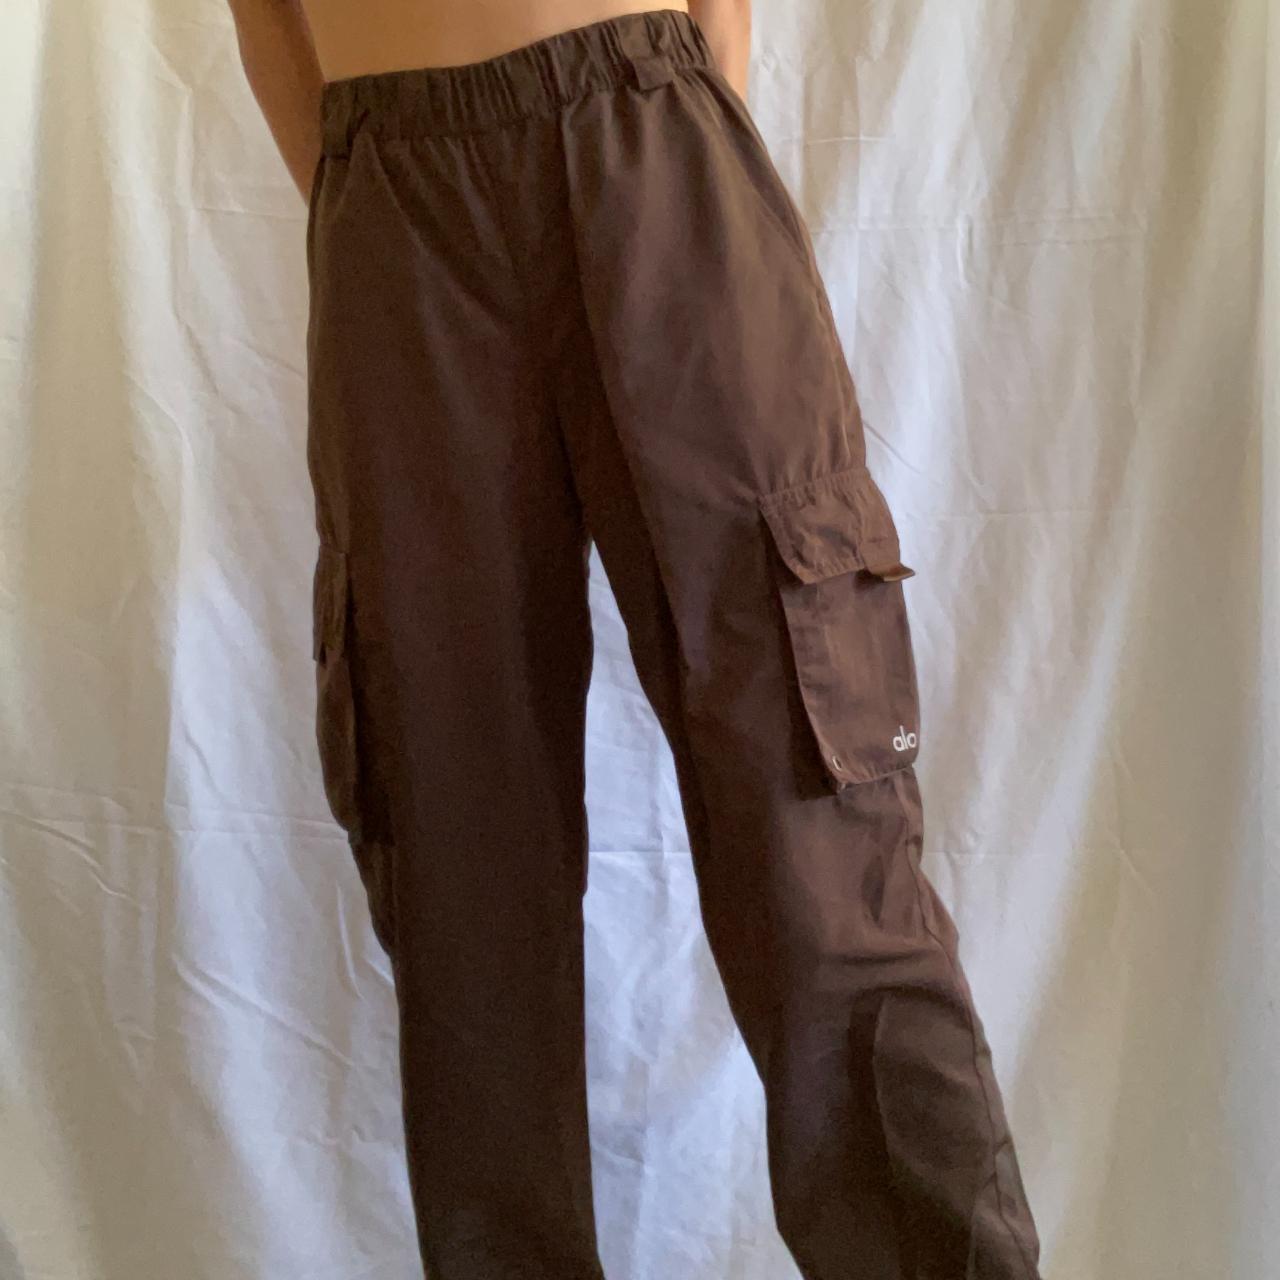 alo yoga it girl cargo pants in espresso brown 🐻 - Depop